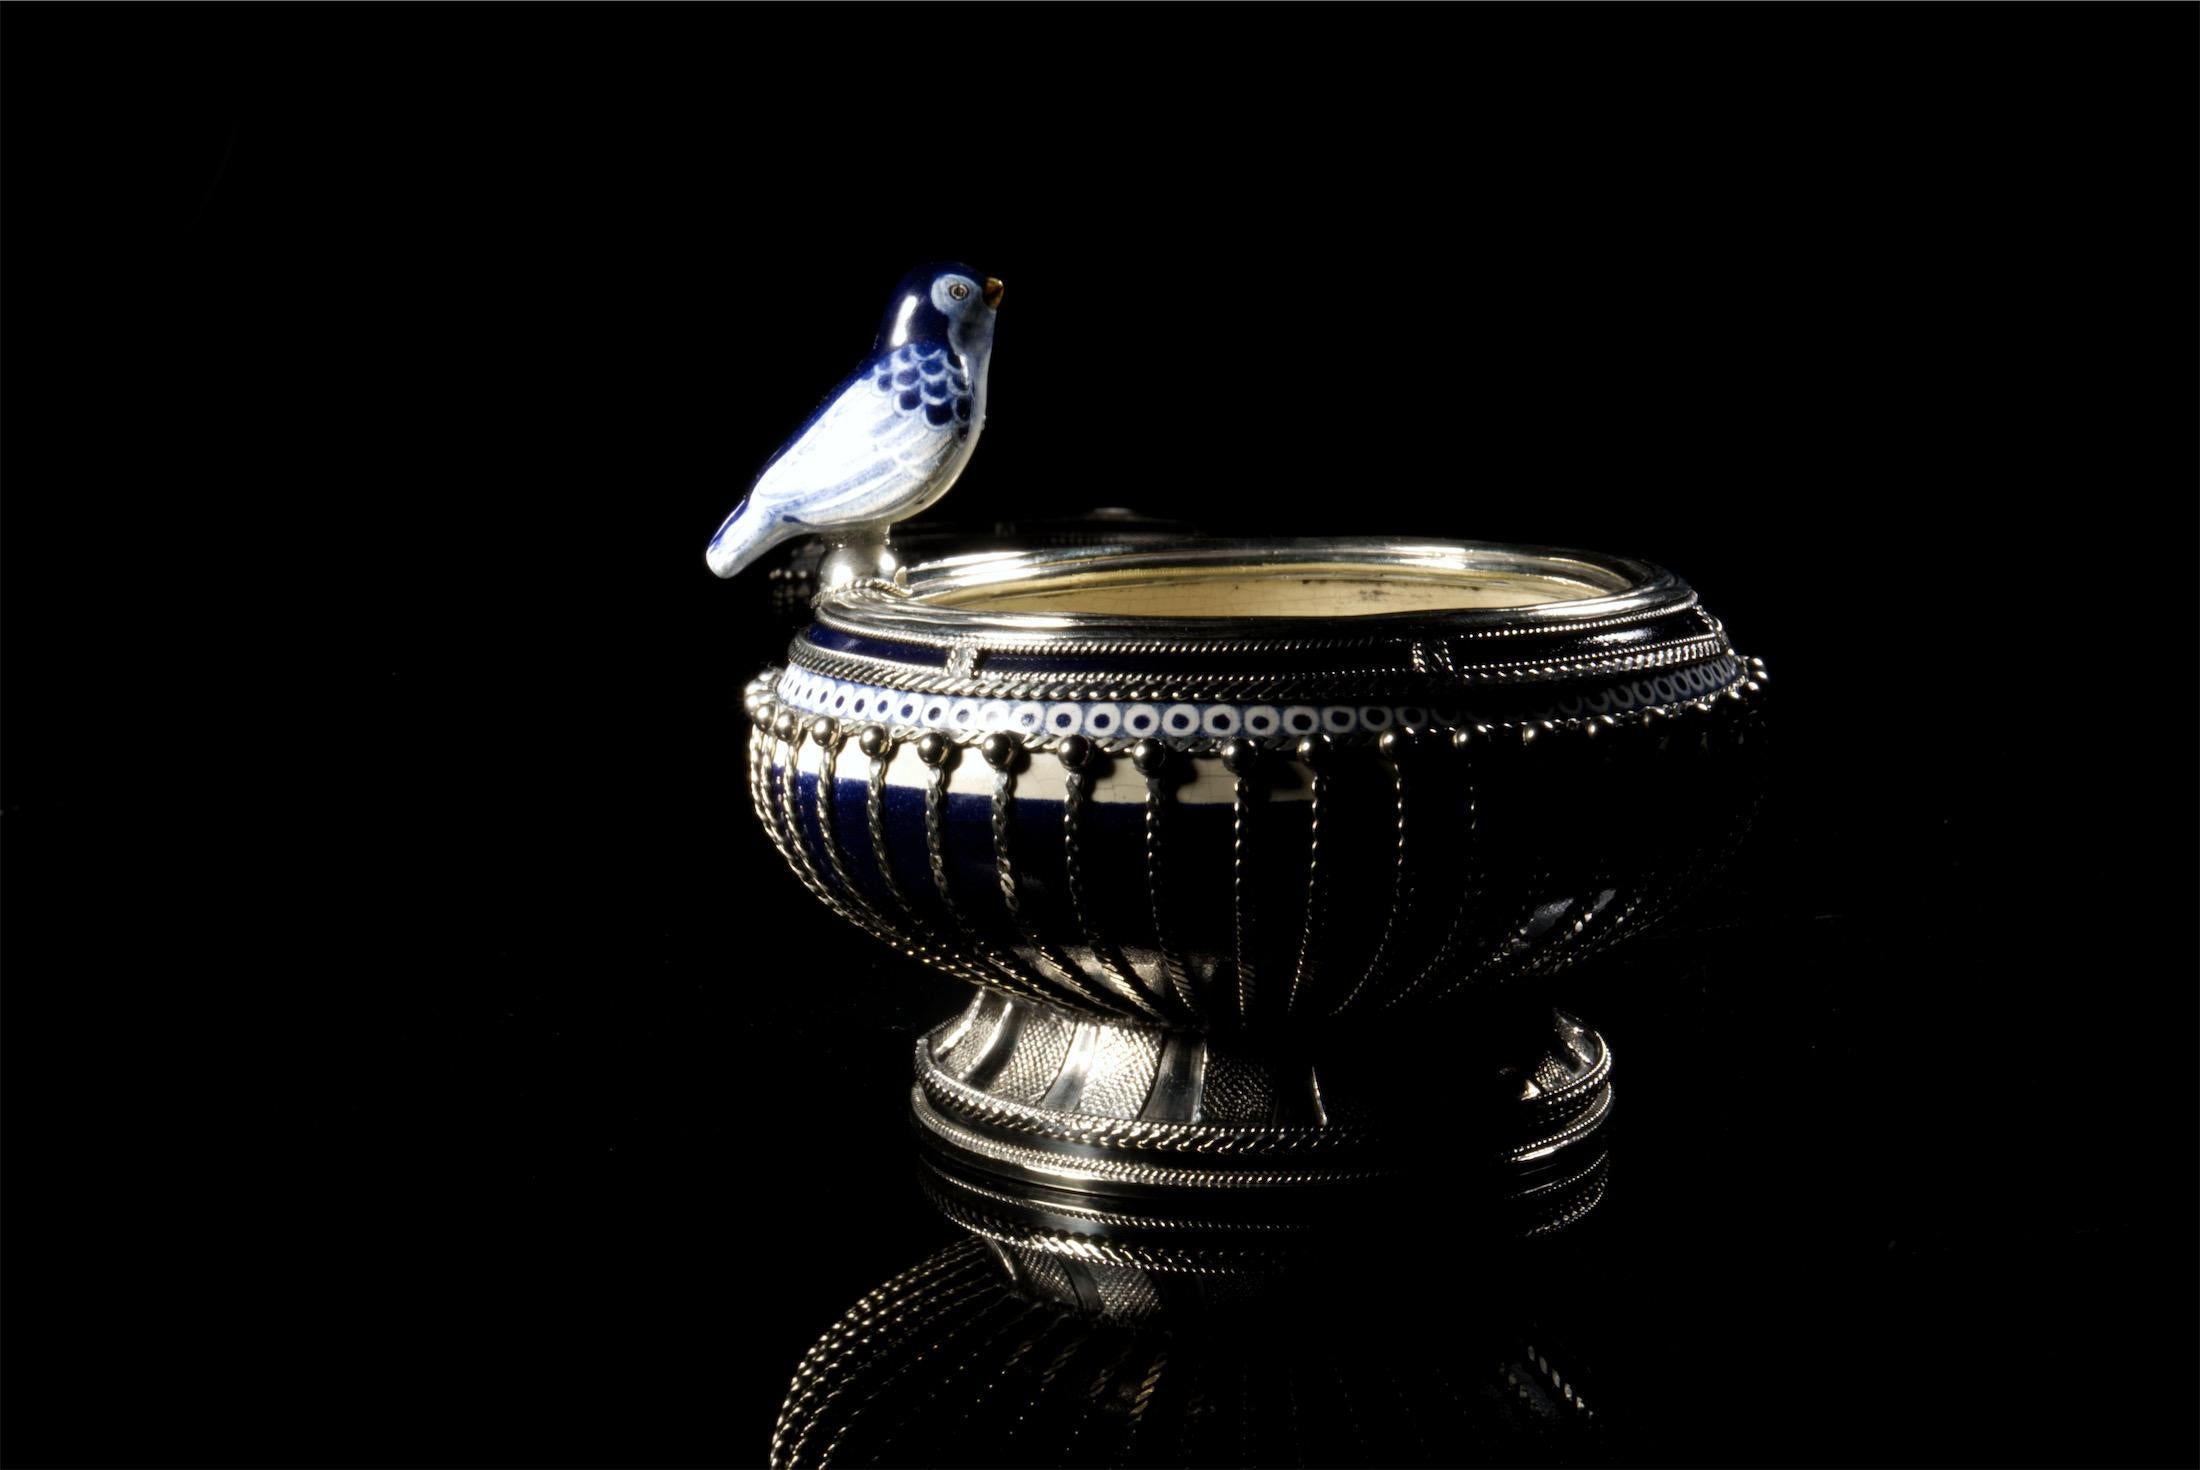 Metalwork Ceramic and White Metal 'Alpaca' Bird Bowl Centerpiece